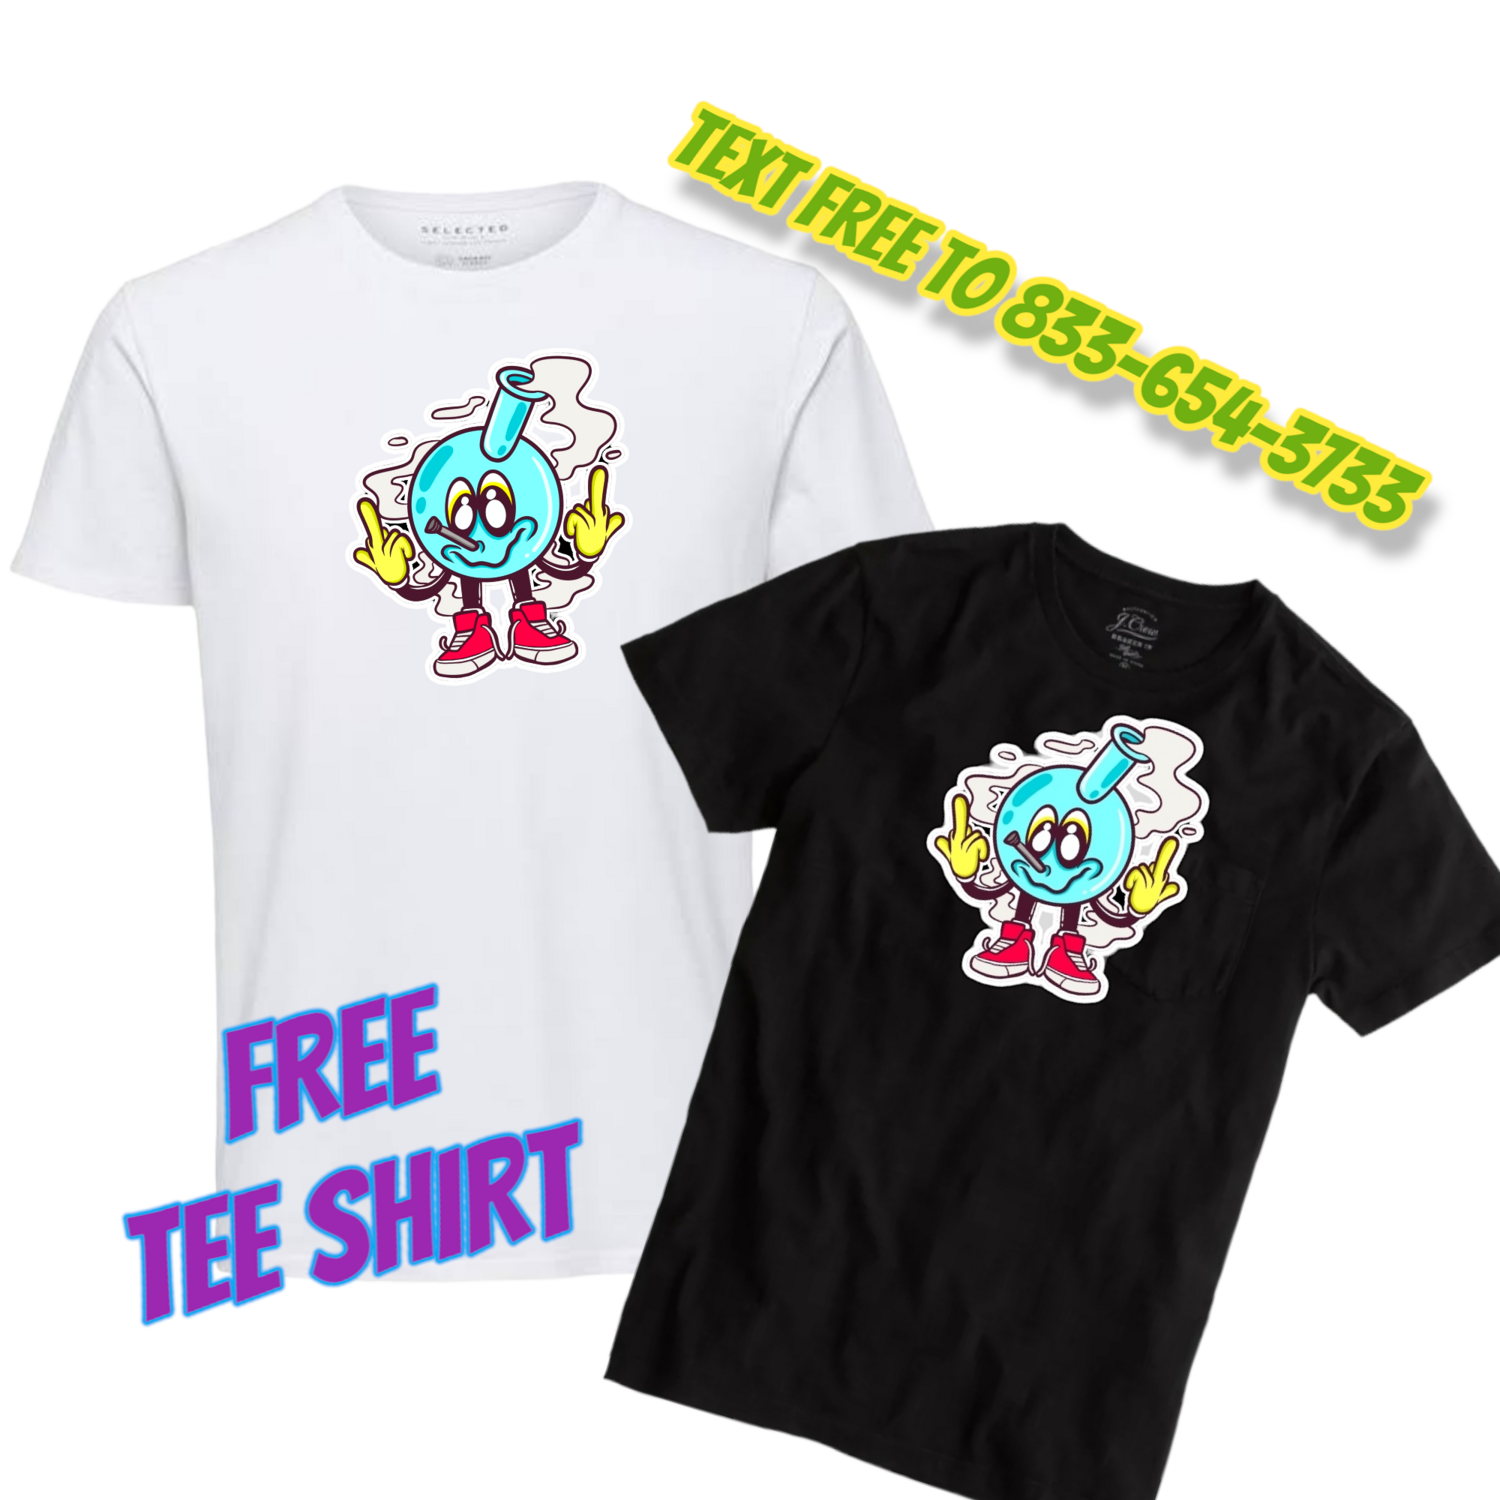 Free tee shirt FU water pipe